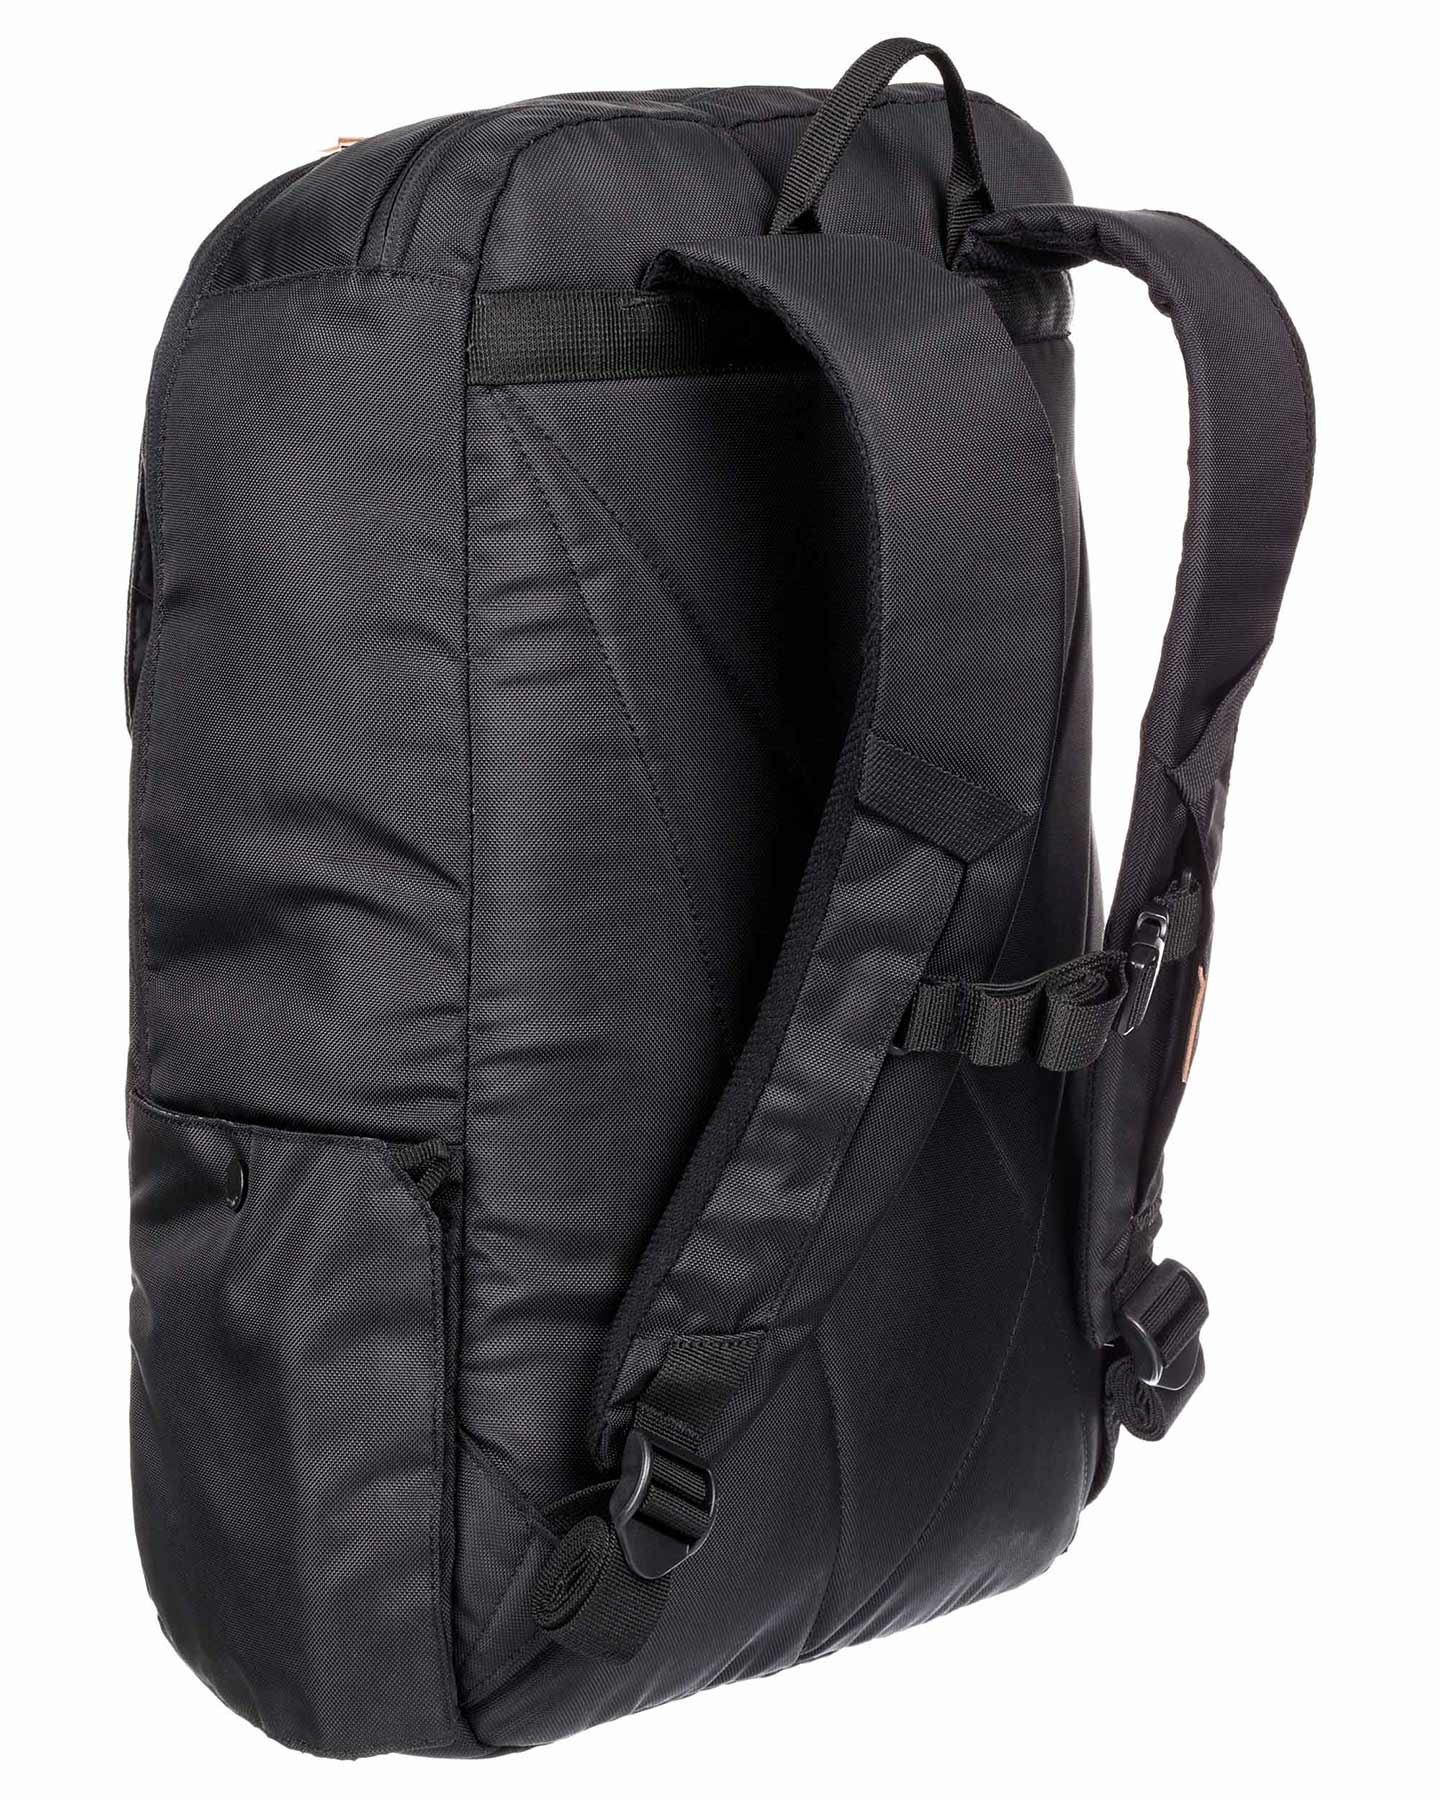 Quiksilver Alpack 30L Large Backpack - Black | SurfStitch